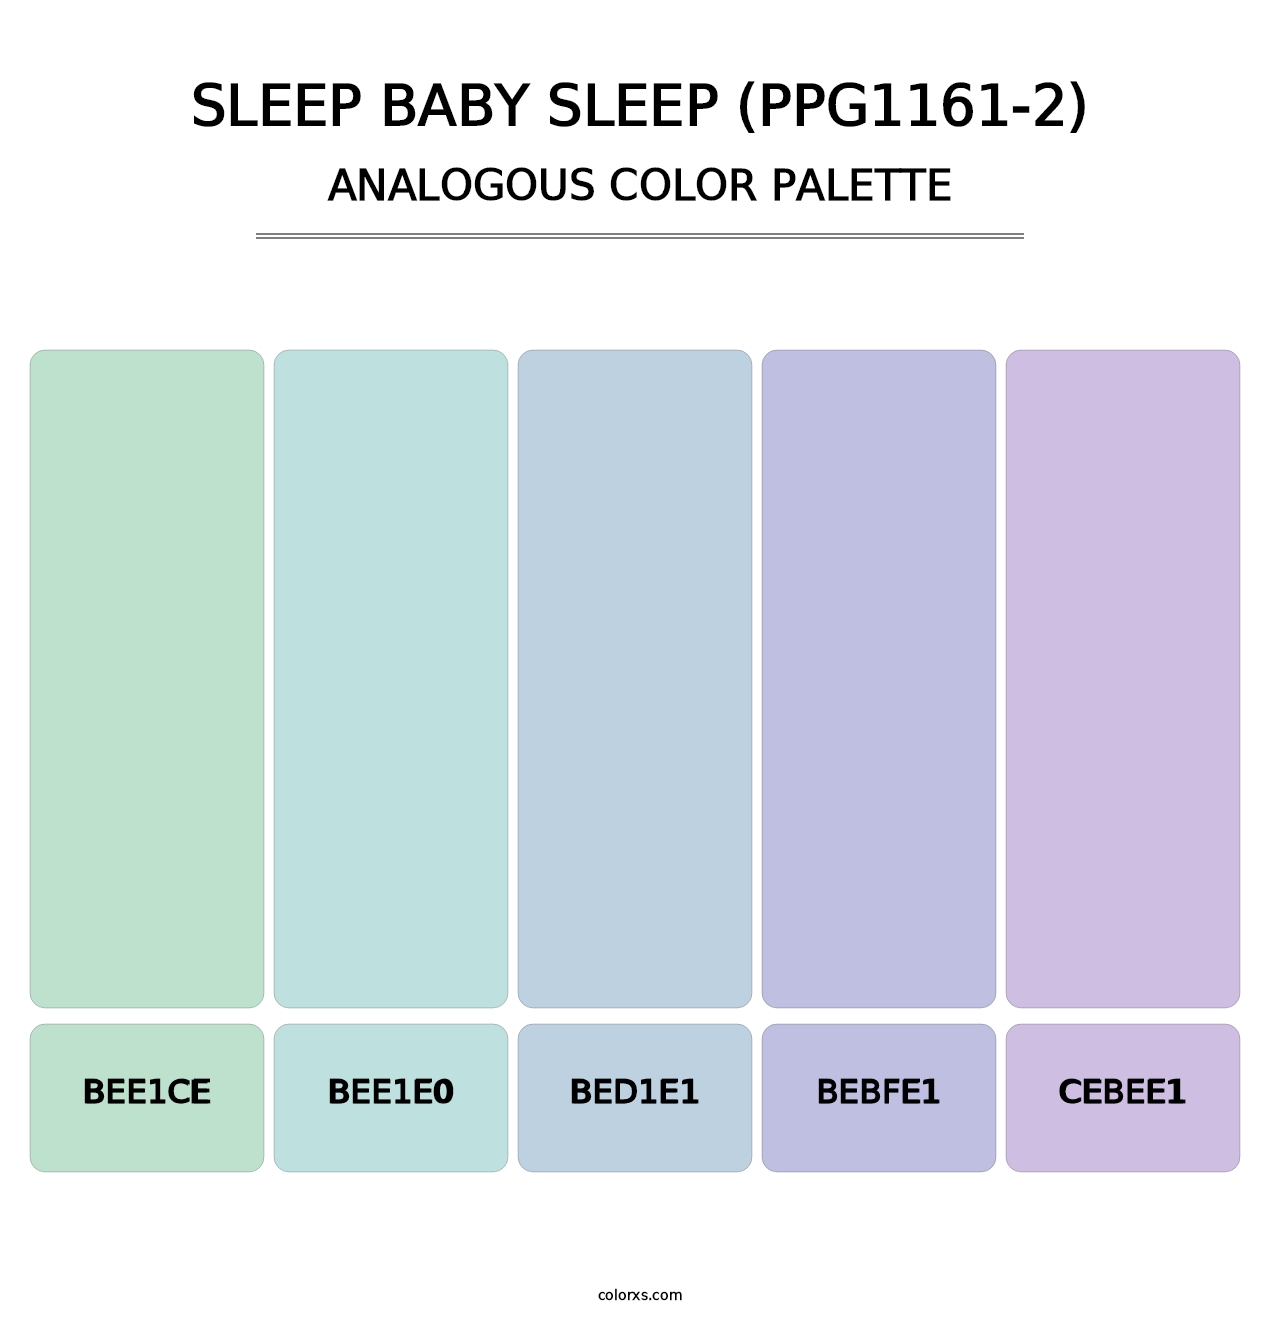 Sleep Baby Sleep (PPG1161-2) - Analogous Color Palette